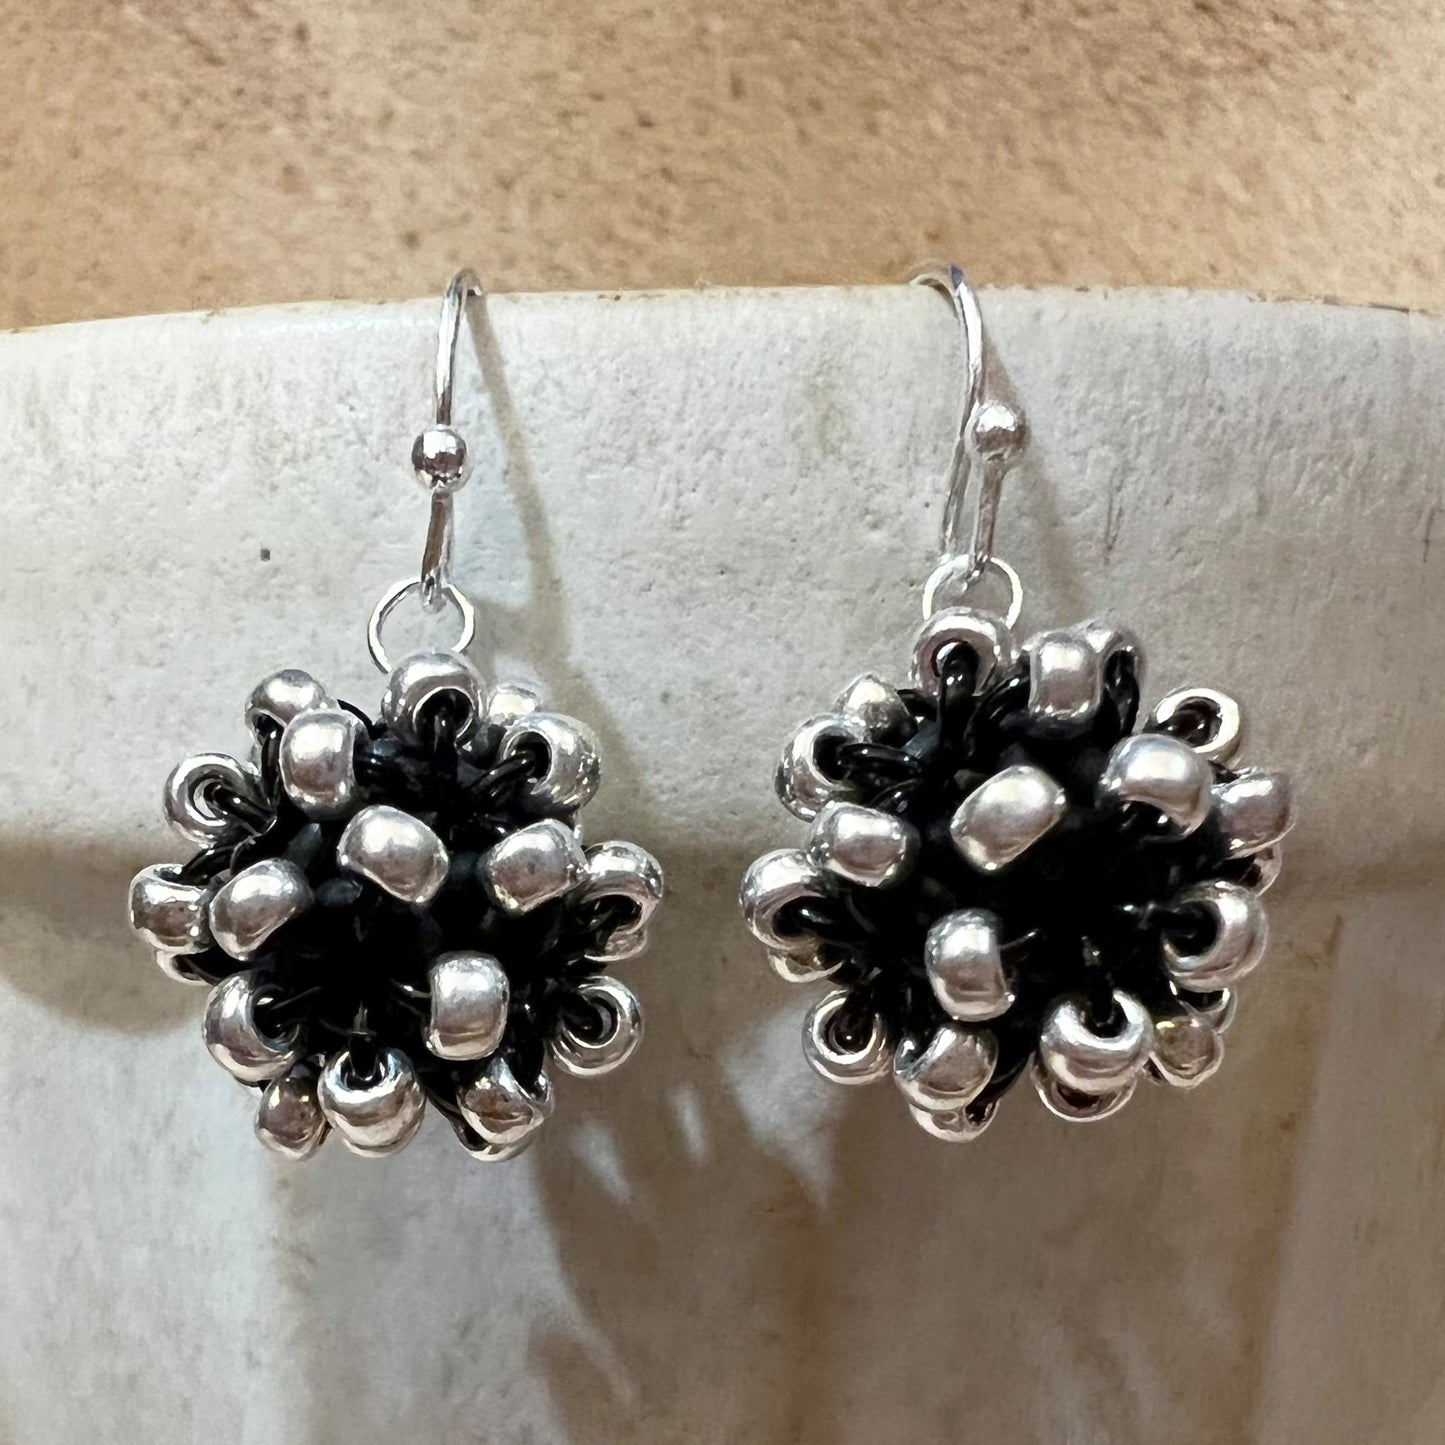 Beaded Ball Earrings - Black & Sterling Silver Plated Beads